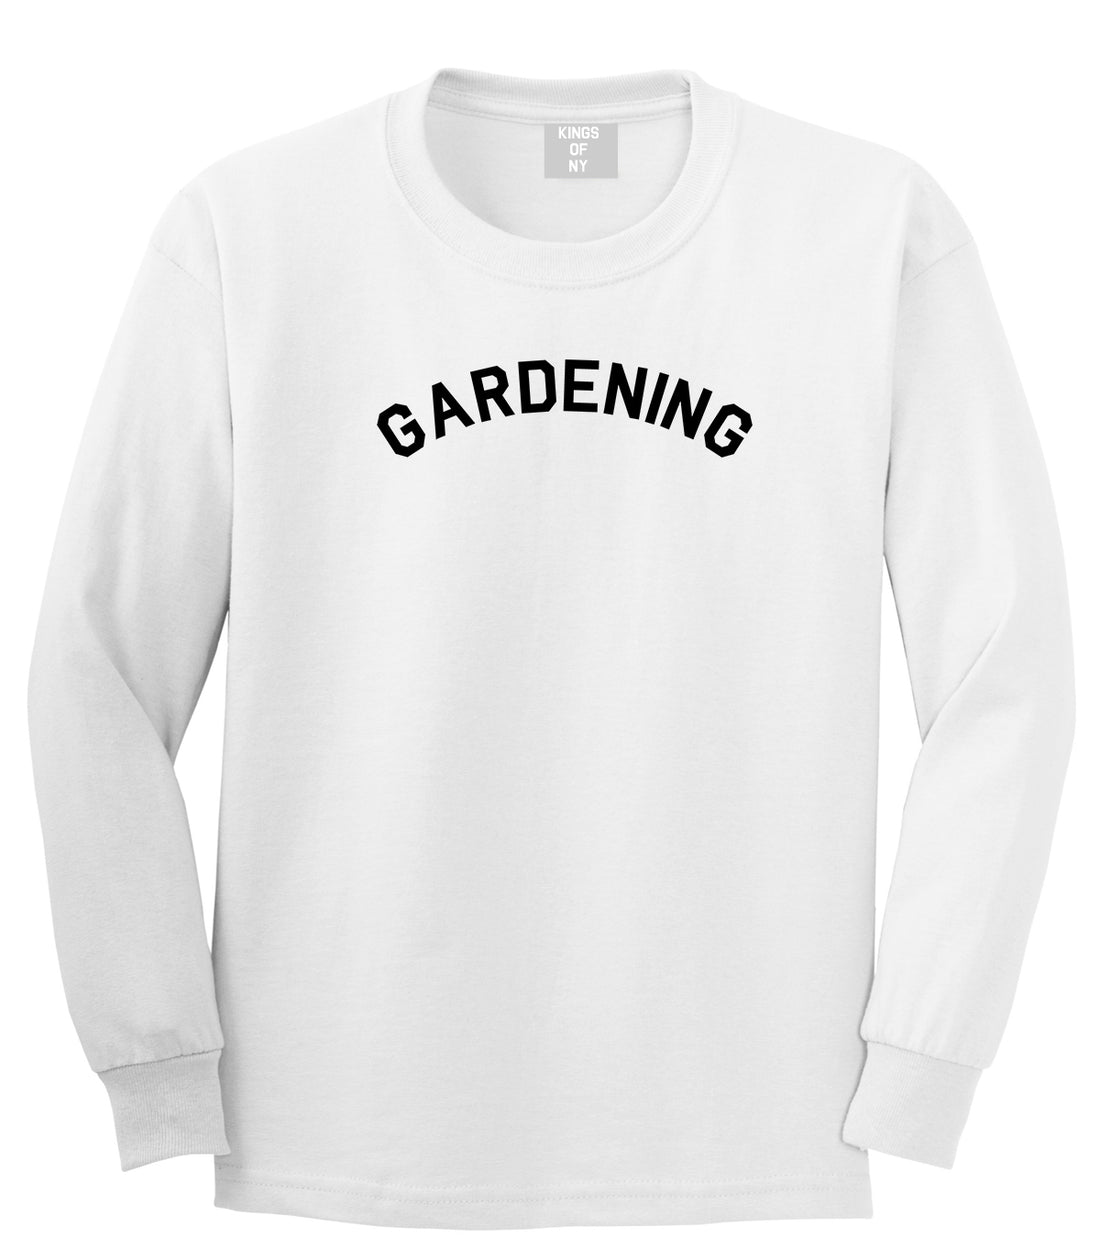 Gardening Garden Mens White Long Sleeve T-Shirt by KINGS OF NY